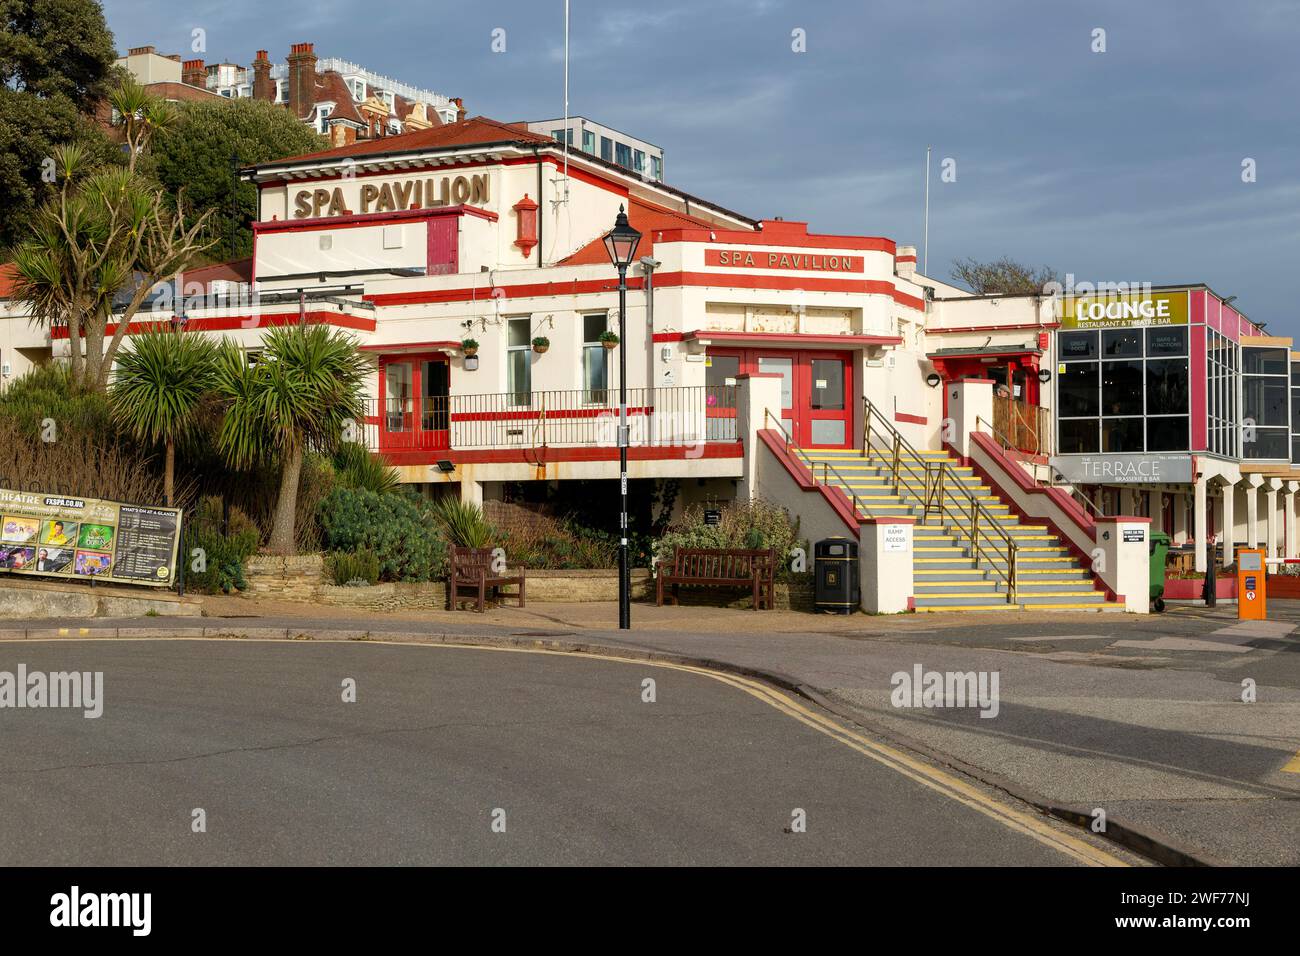 Spa Pavilion theatre venue, Felixstowe, Suffolk, England, UK Stock Photo